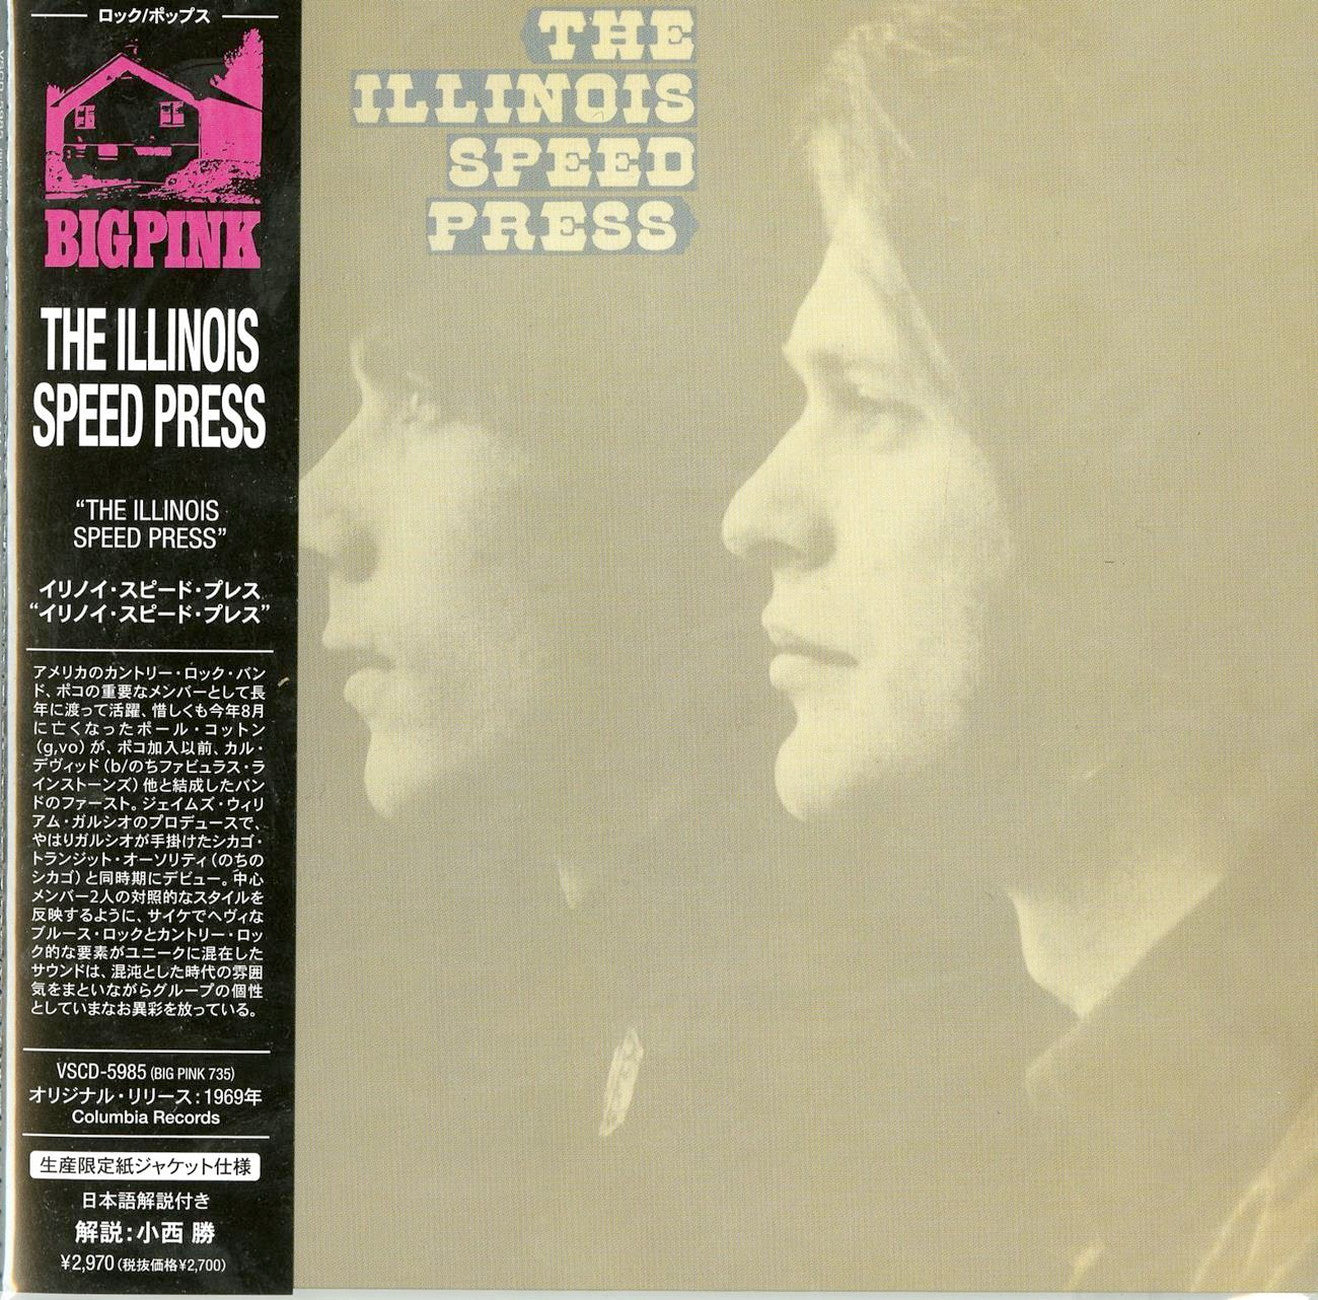 Illinois Speed Press - The Illinois Speed Press - Import Mini LP CD